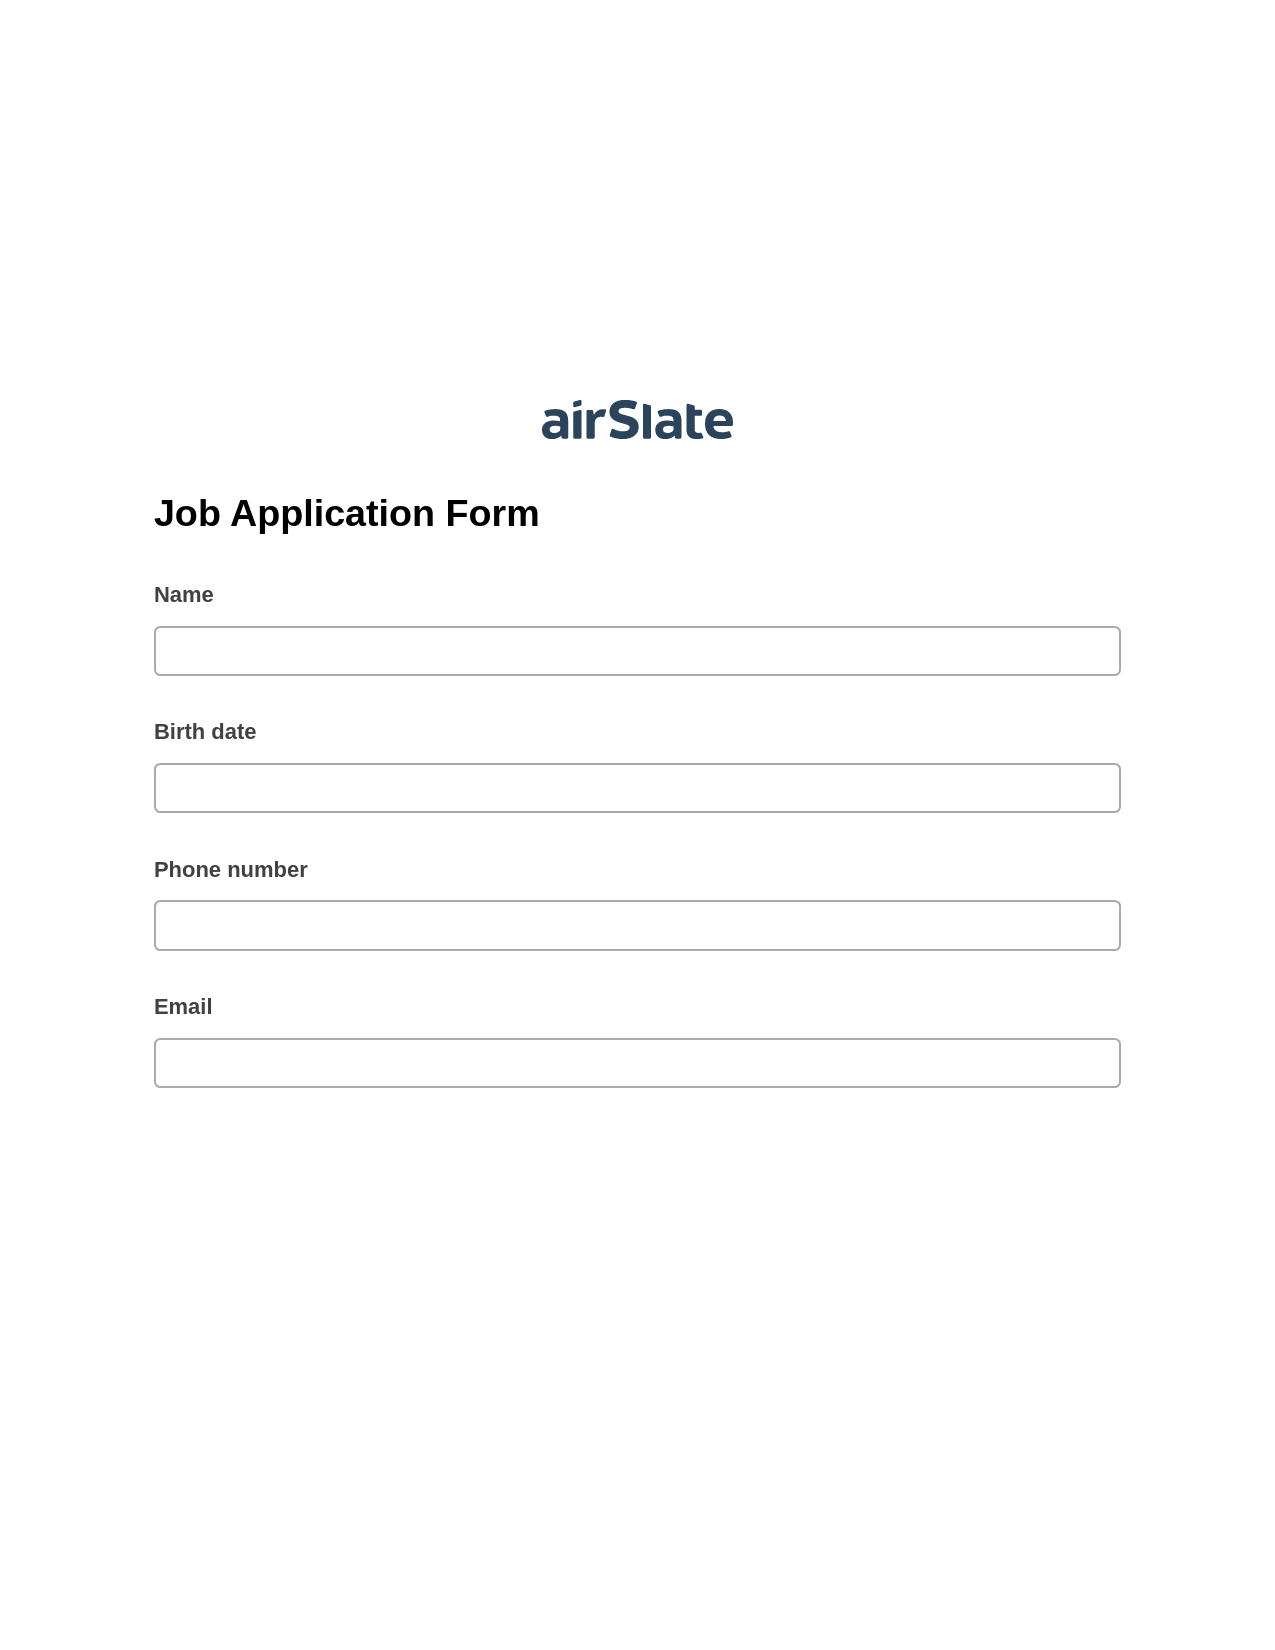 Job Application Form Pre-fill from Google Sheet Dropdown Options Bot, Create Slate Reminder Bot, Export to Google Sheet Bot